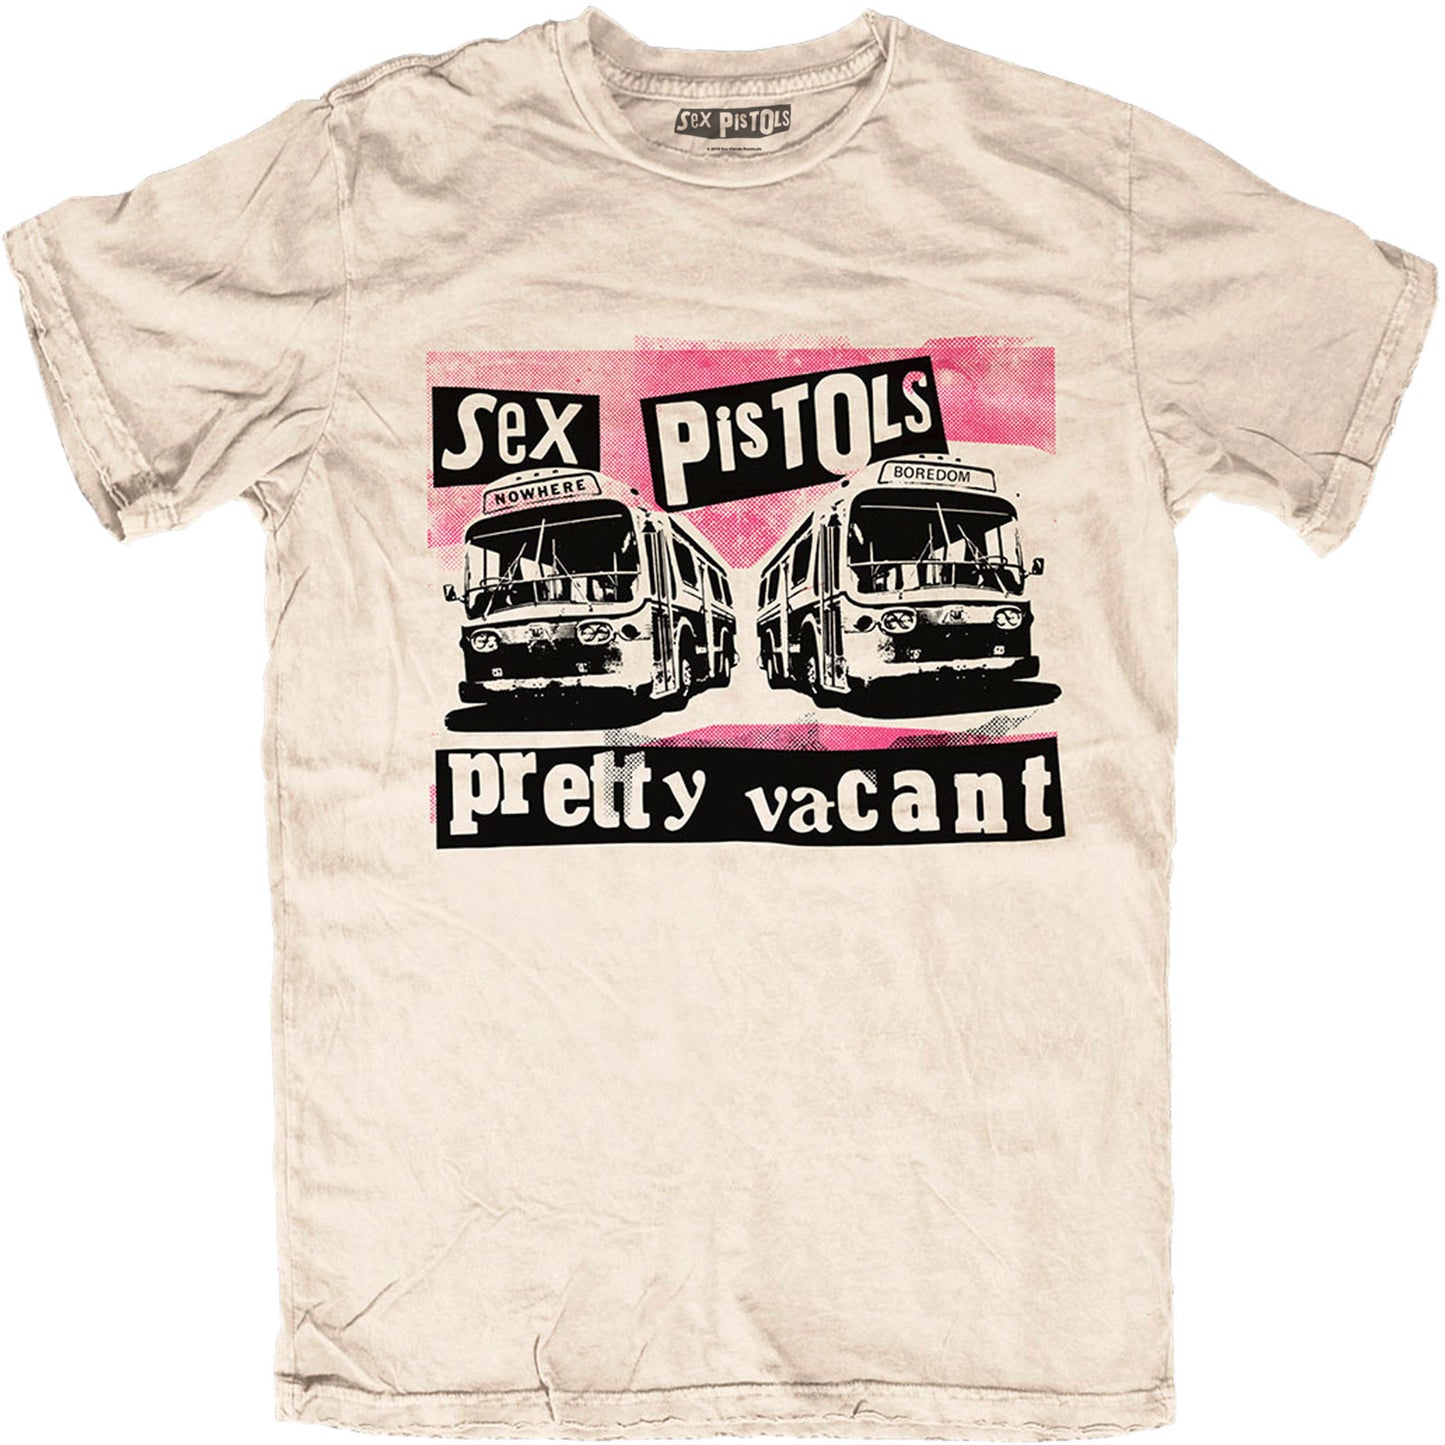 The Sex Pistols T-Shirt: Pretty Vacant